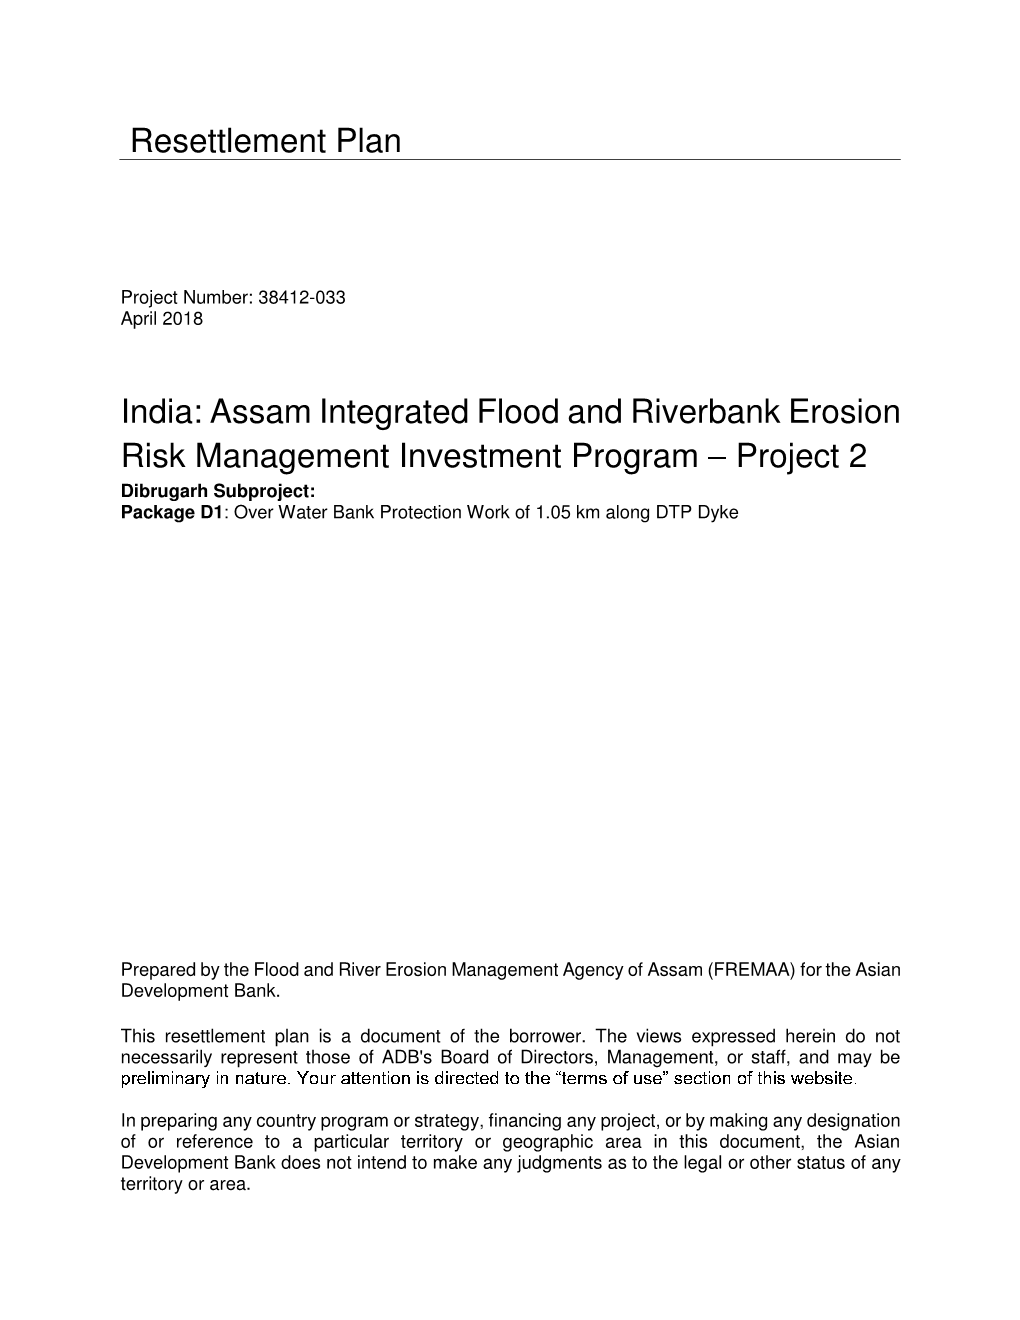 38412-033: Assam Integrated Flood and Riverbank Erosion Risk